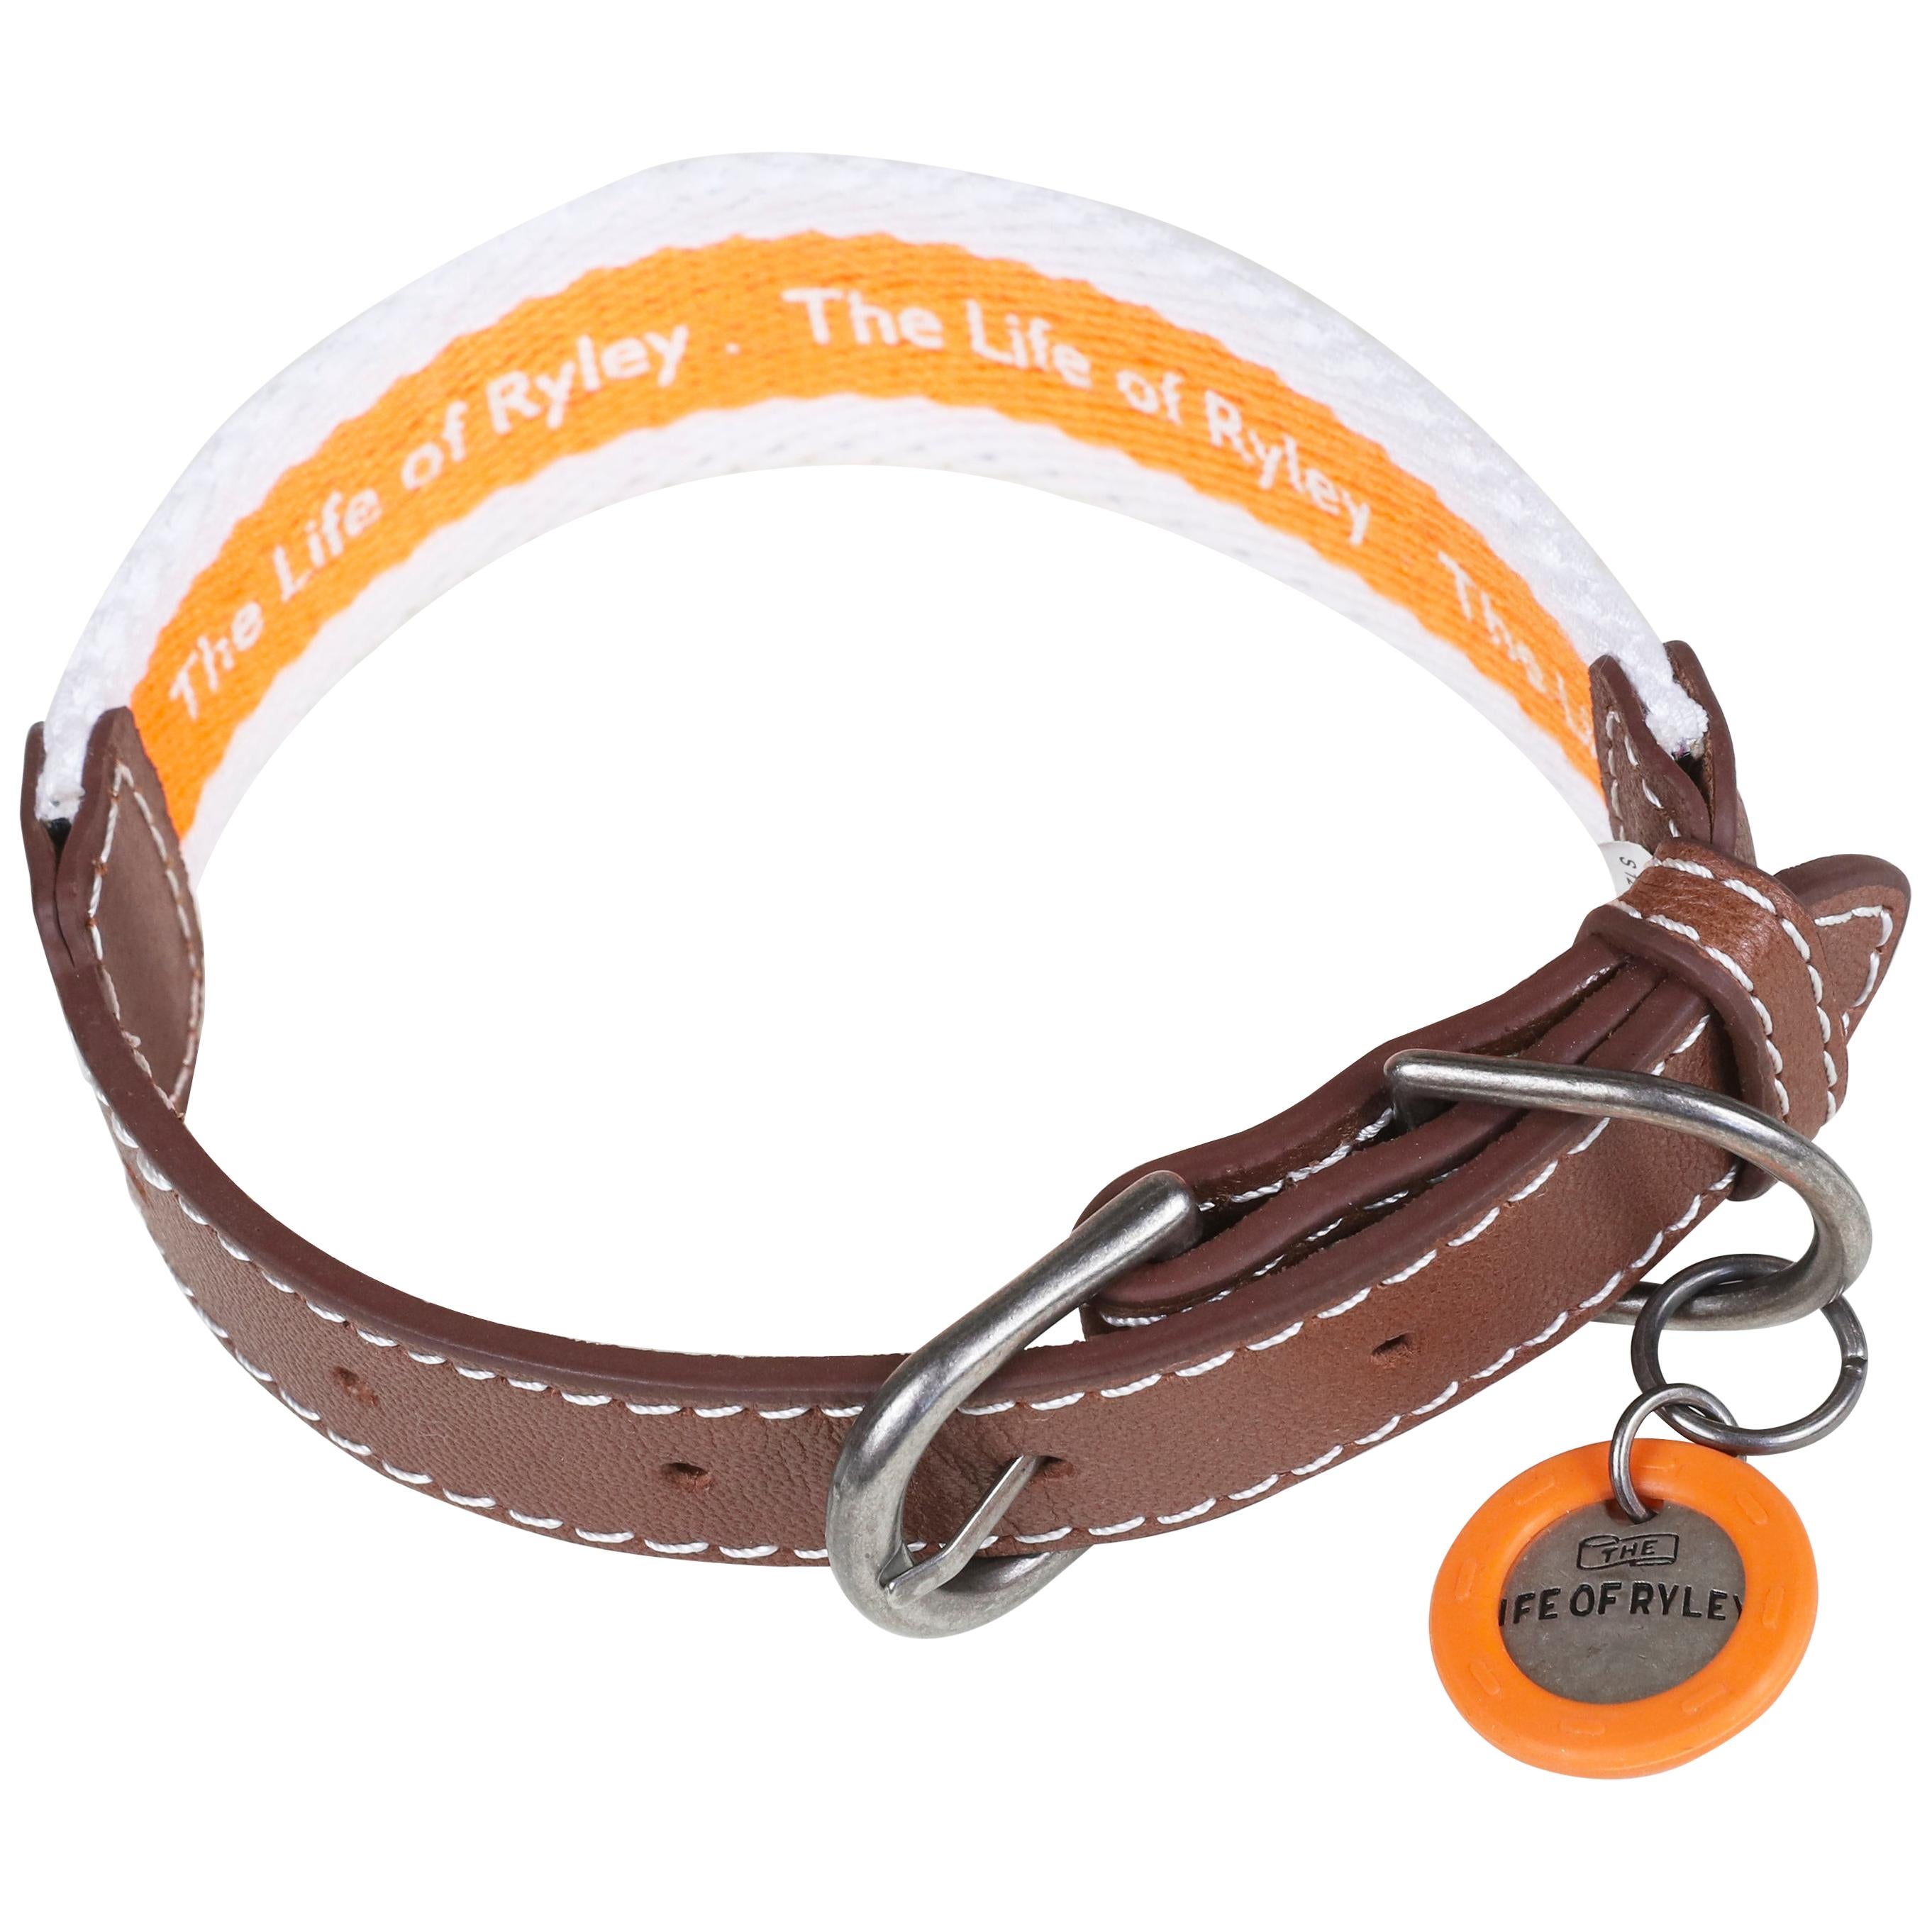 The Life of Ryley Dog Collar